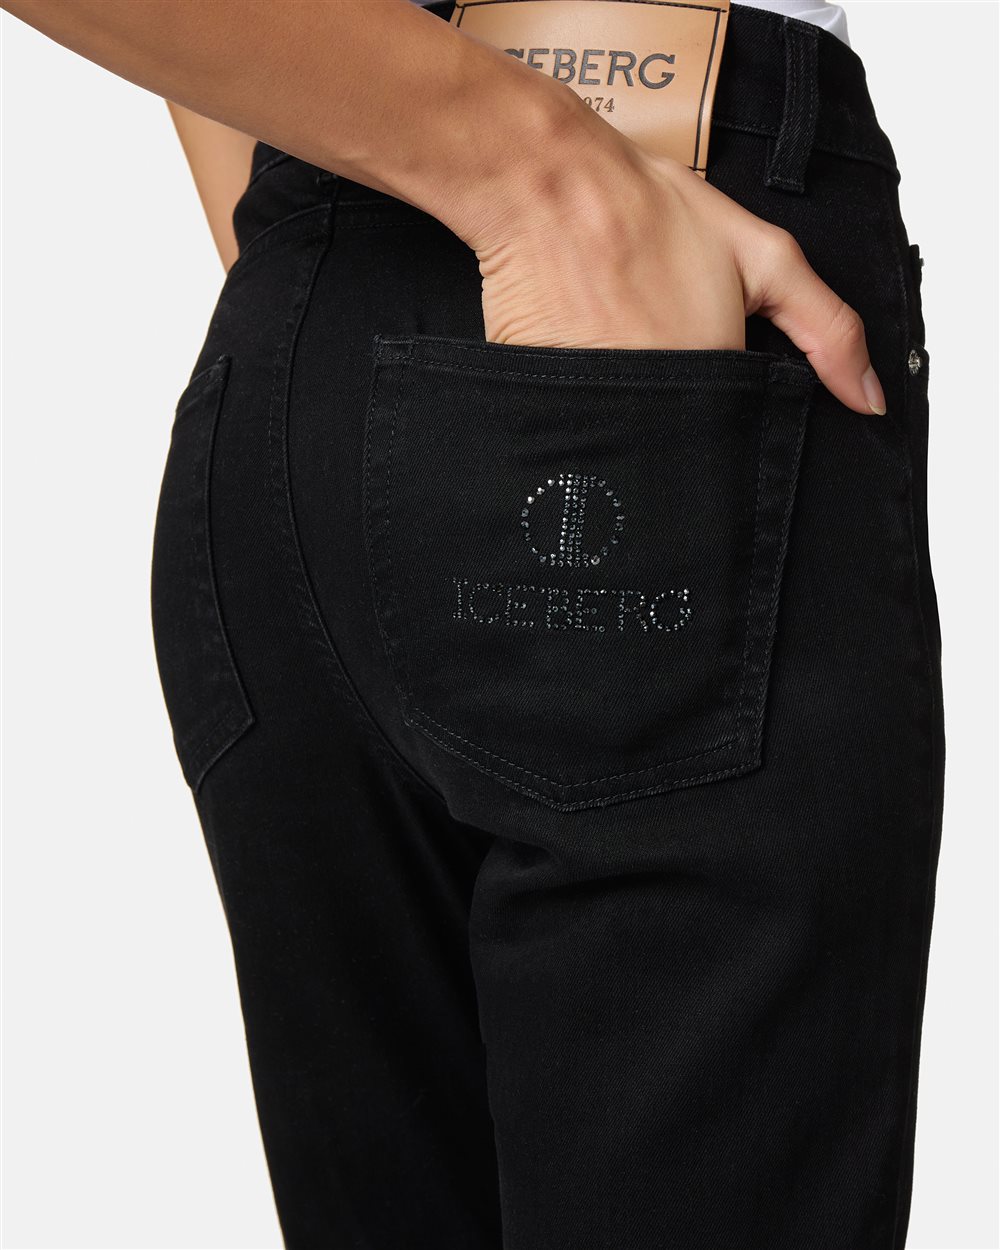 5-pocket skinny jeans - Iceberg - Official Website